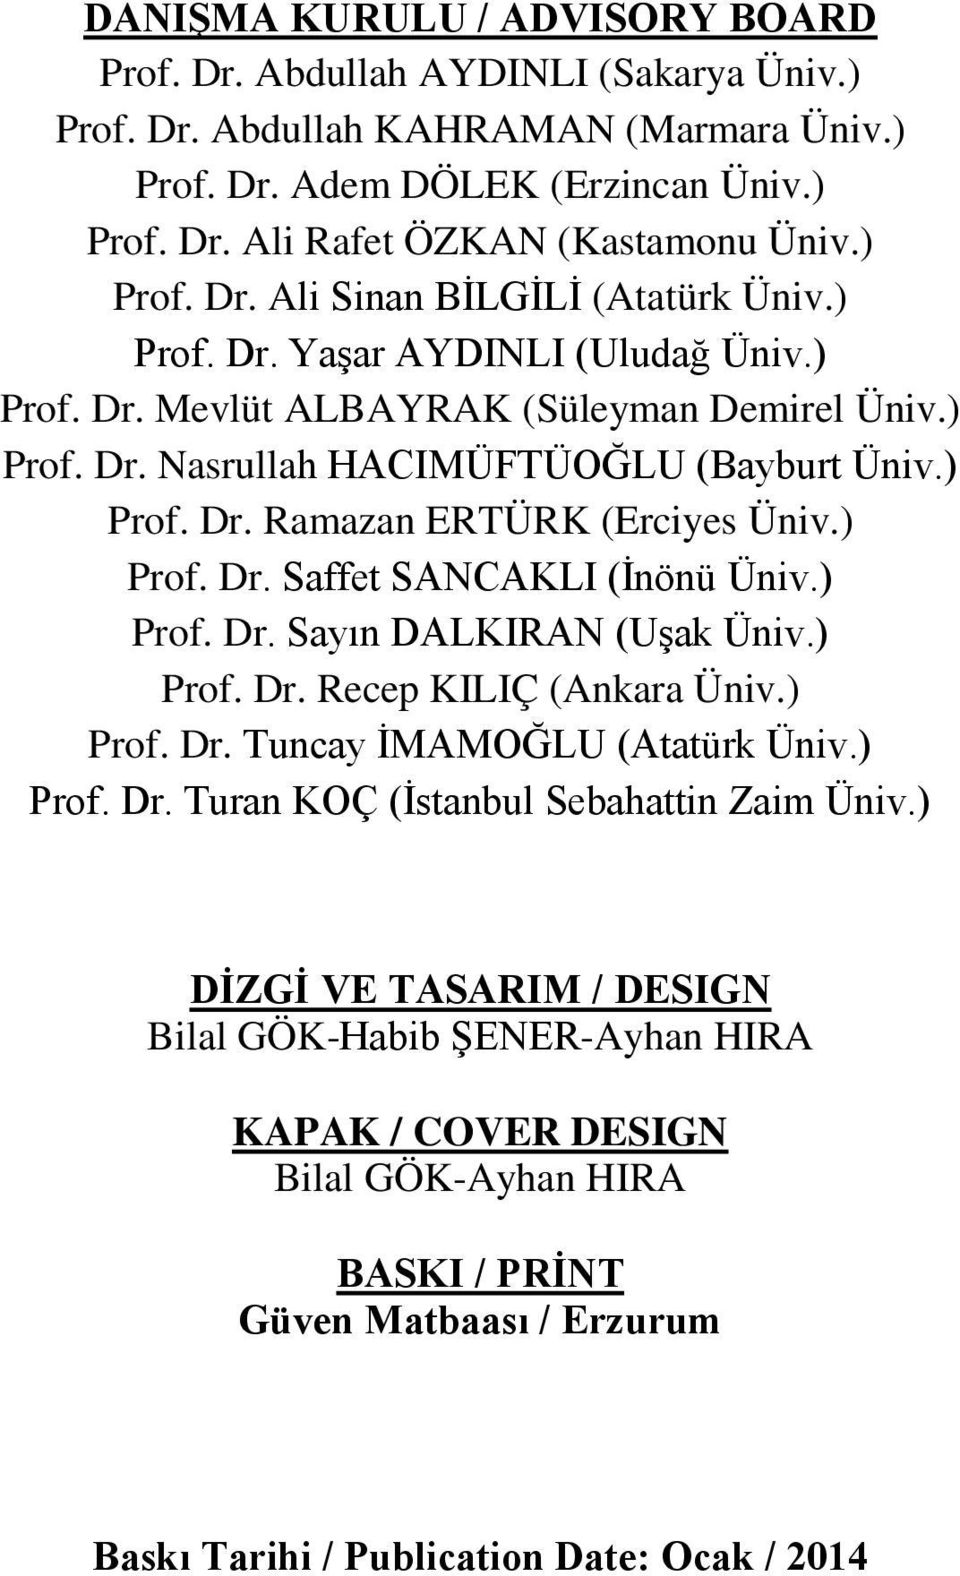 ) Prof. Dr. Saffet SANCAKLI (İnönü Üniv.) Prof. Dr. Sayın DALKIRAN (Uşak Üniv.) Prof. Dr. Recep KILIÇ (Ankara Üniv.) Prof. Dr. Tuncay İMAMOĞLU (Atatürk Üniv.) Prof. Dr. Turan KOÇ (İstanbul Sebahattin Zaim Üniv.